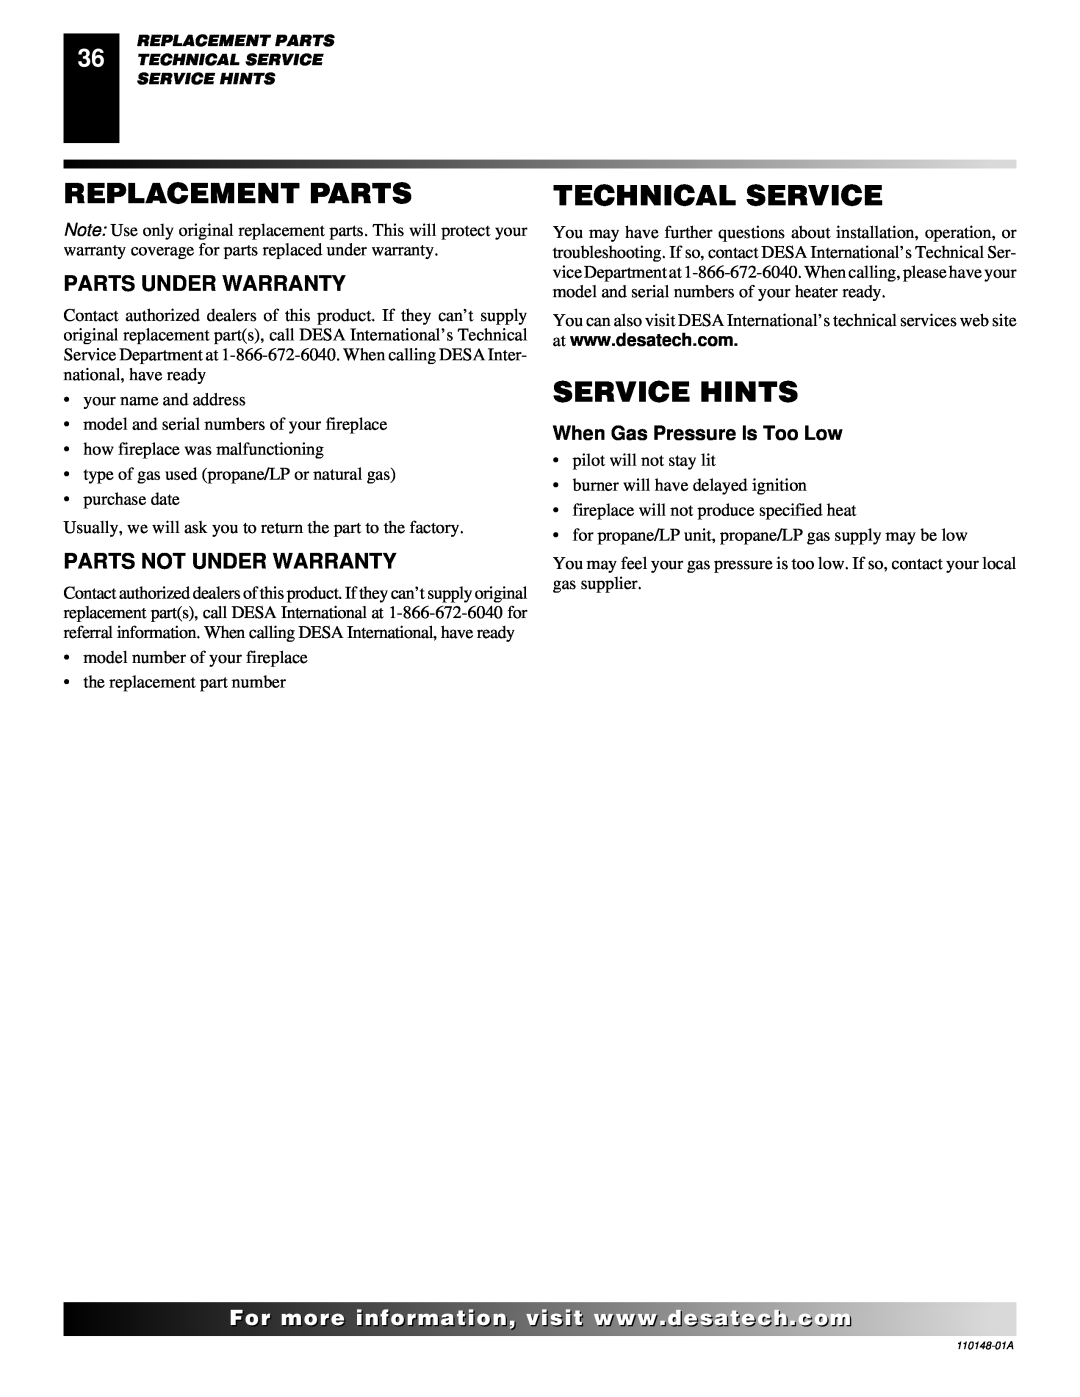 Desa VYGF33NRB Replacement Parts, Technical Service, Service Hints, Parts Under Warranty, Parts Not Under Warranty 